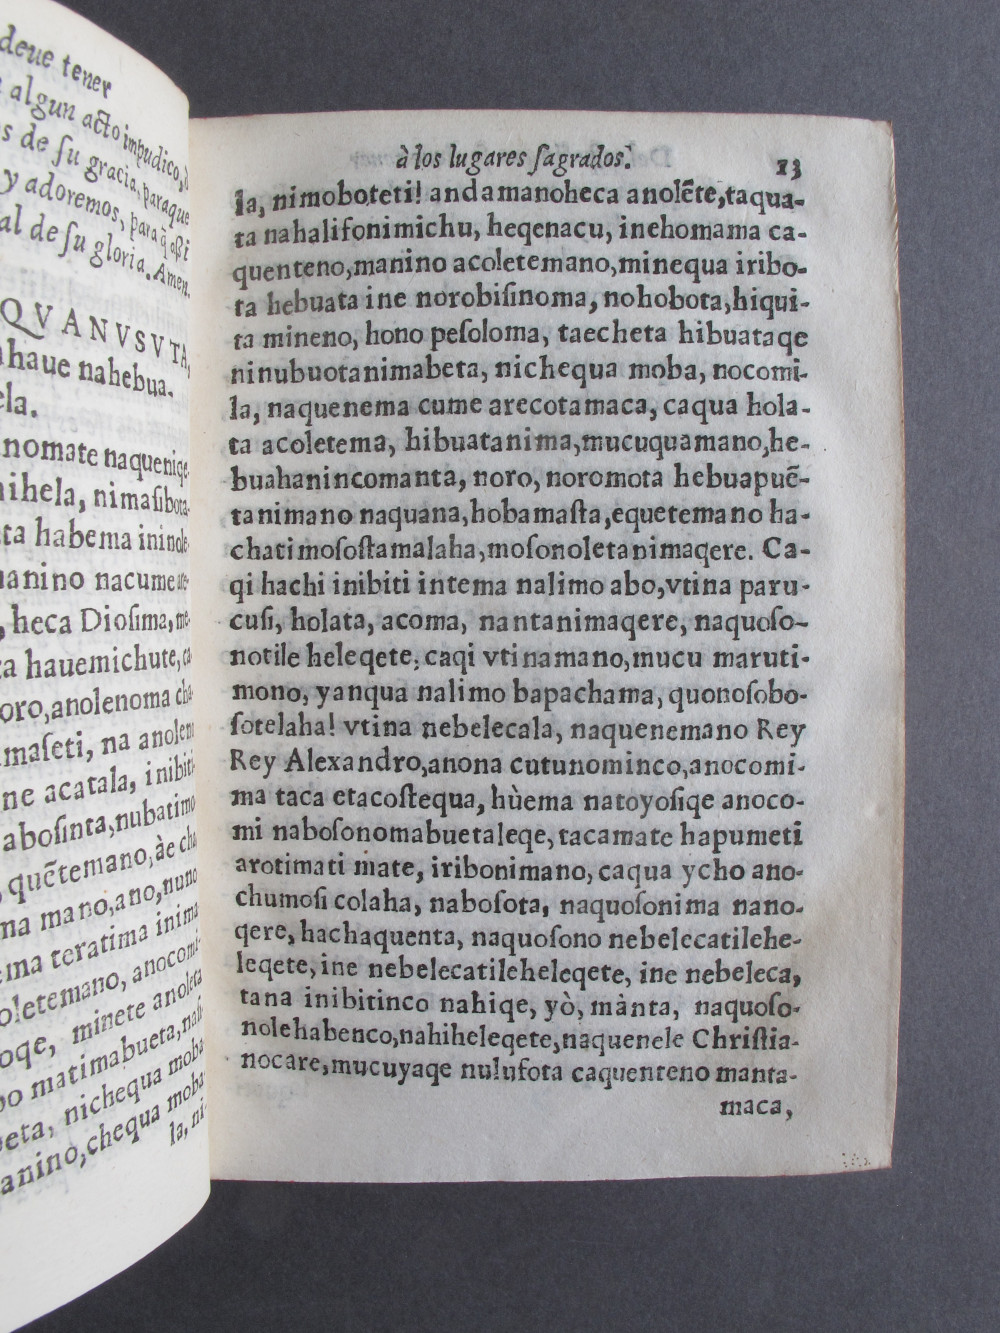 Folio B8 recto